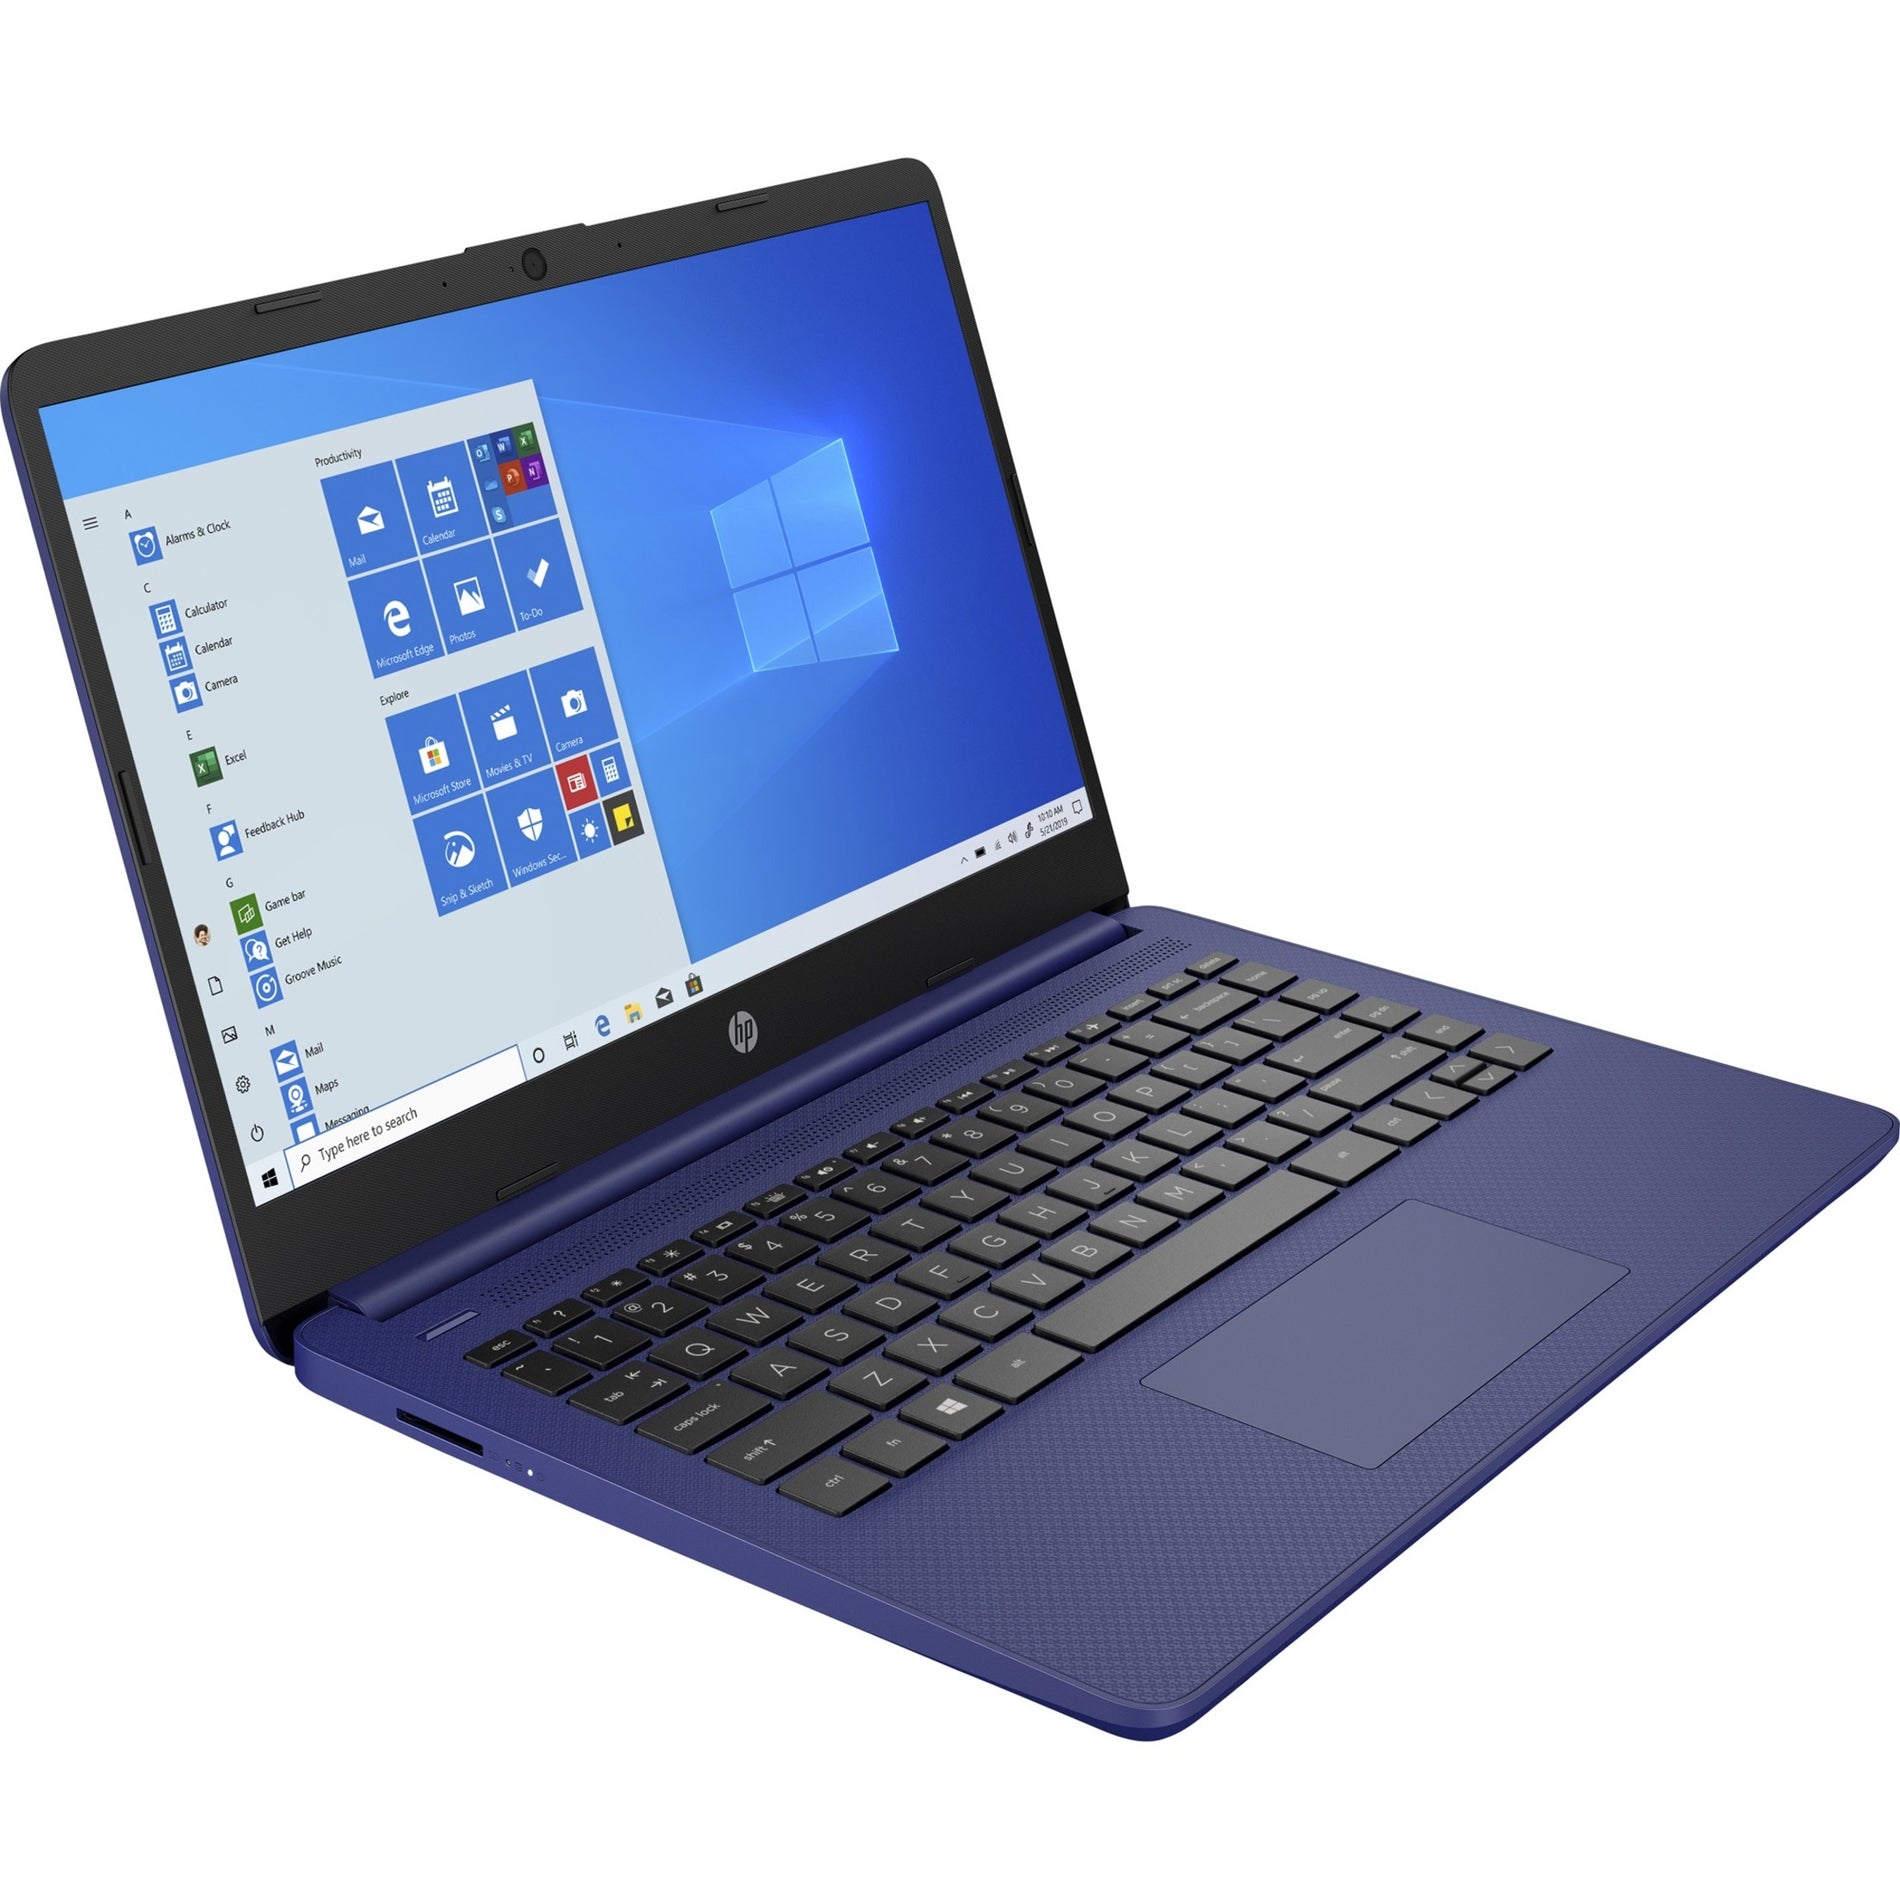 HP Laptop 14-dq0010nr, 14" HD Notebook, Intel Celeron N4020, 4GB RAM, 64GB Flash Memory, Indigo Blue